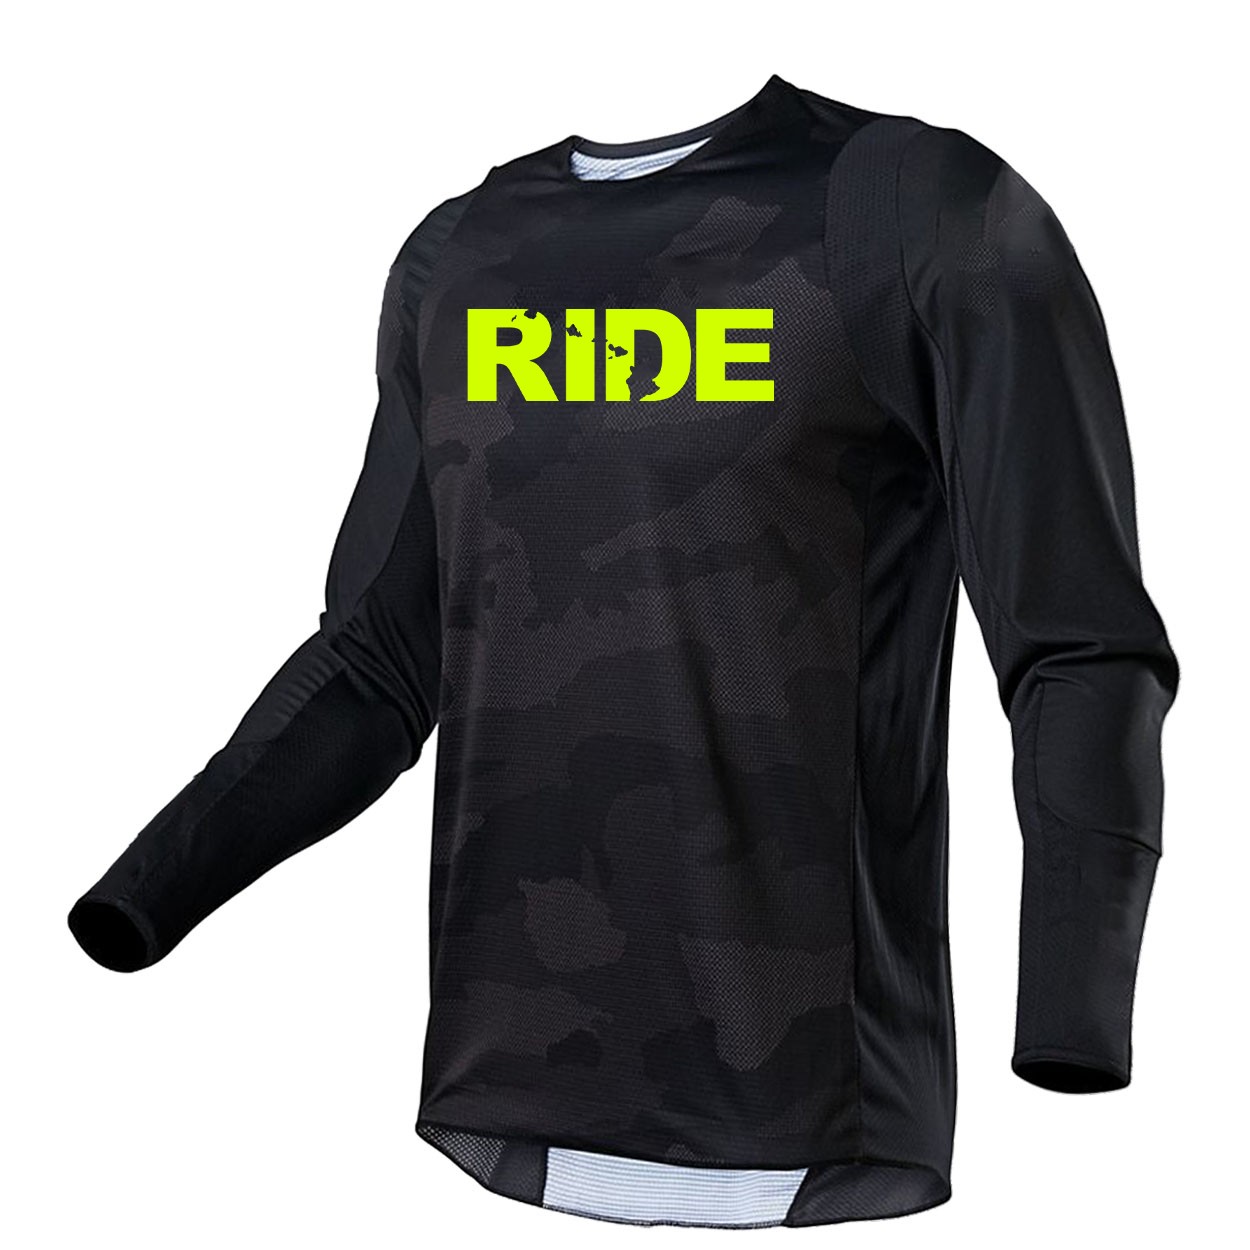 Ride Hawaii Classic Performance Jersey Long Sleeve Shirt Black Camo (Hi-Vis Logo)